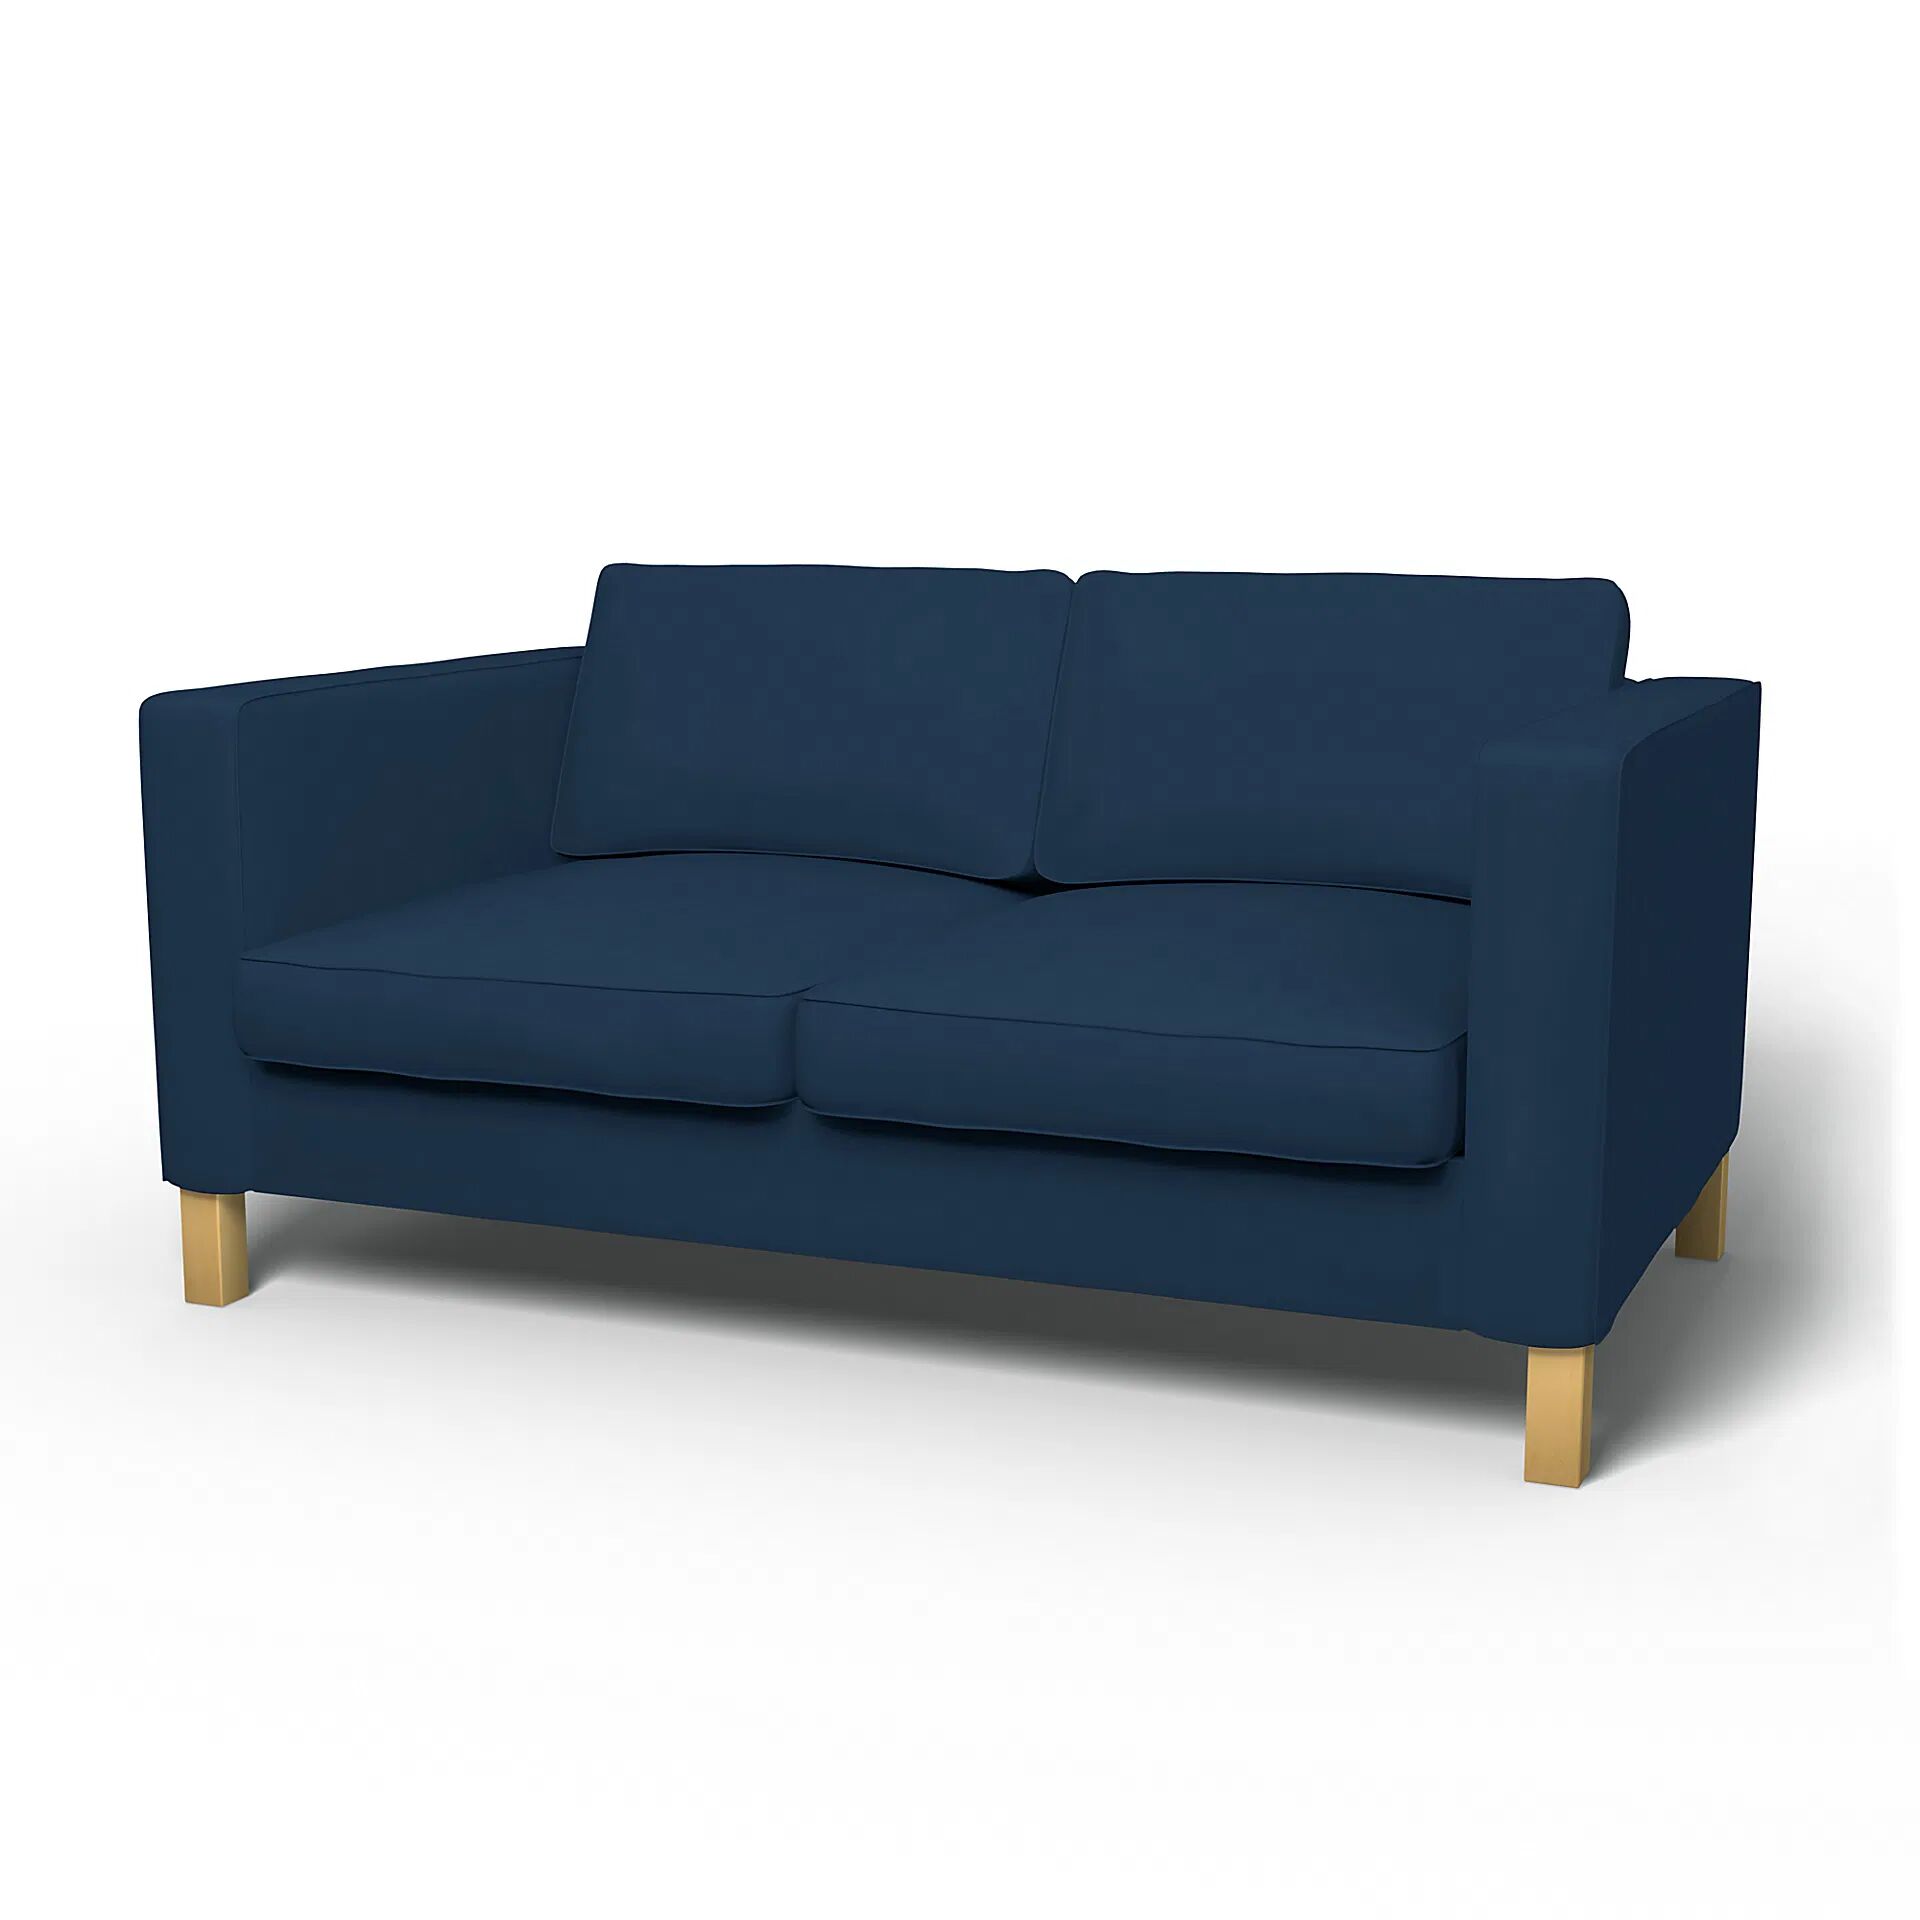 IKEA - Karlanda 2 Seater Sofa Cover, Deep Navy Blue, Cotton - Bemz